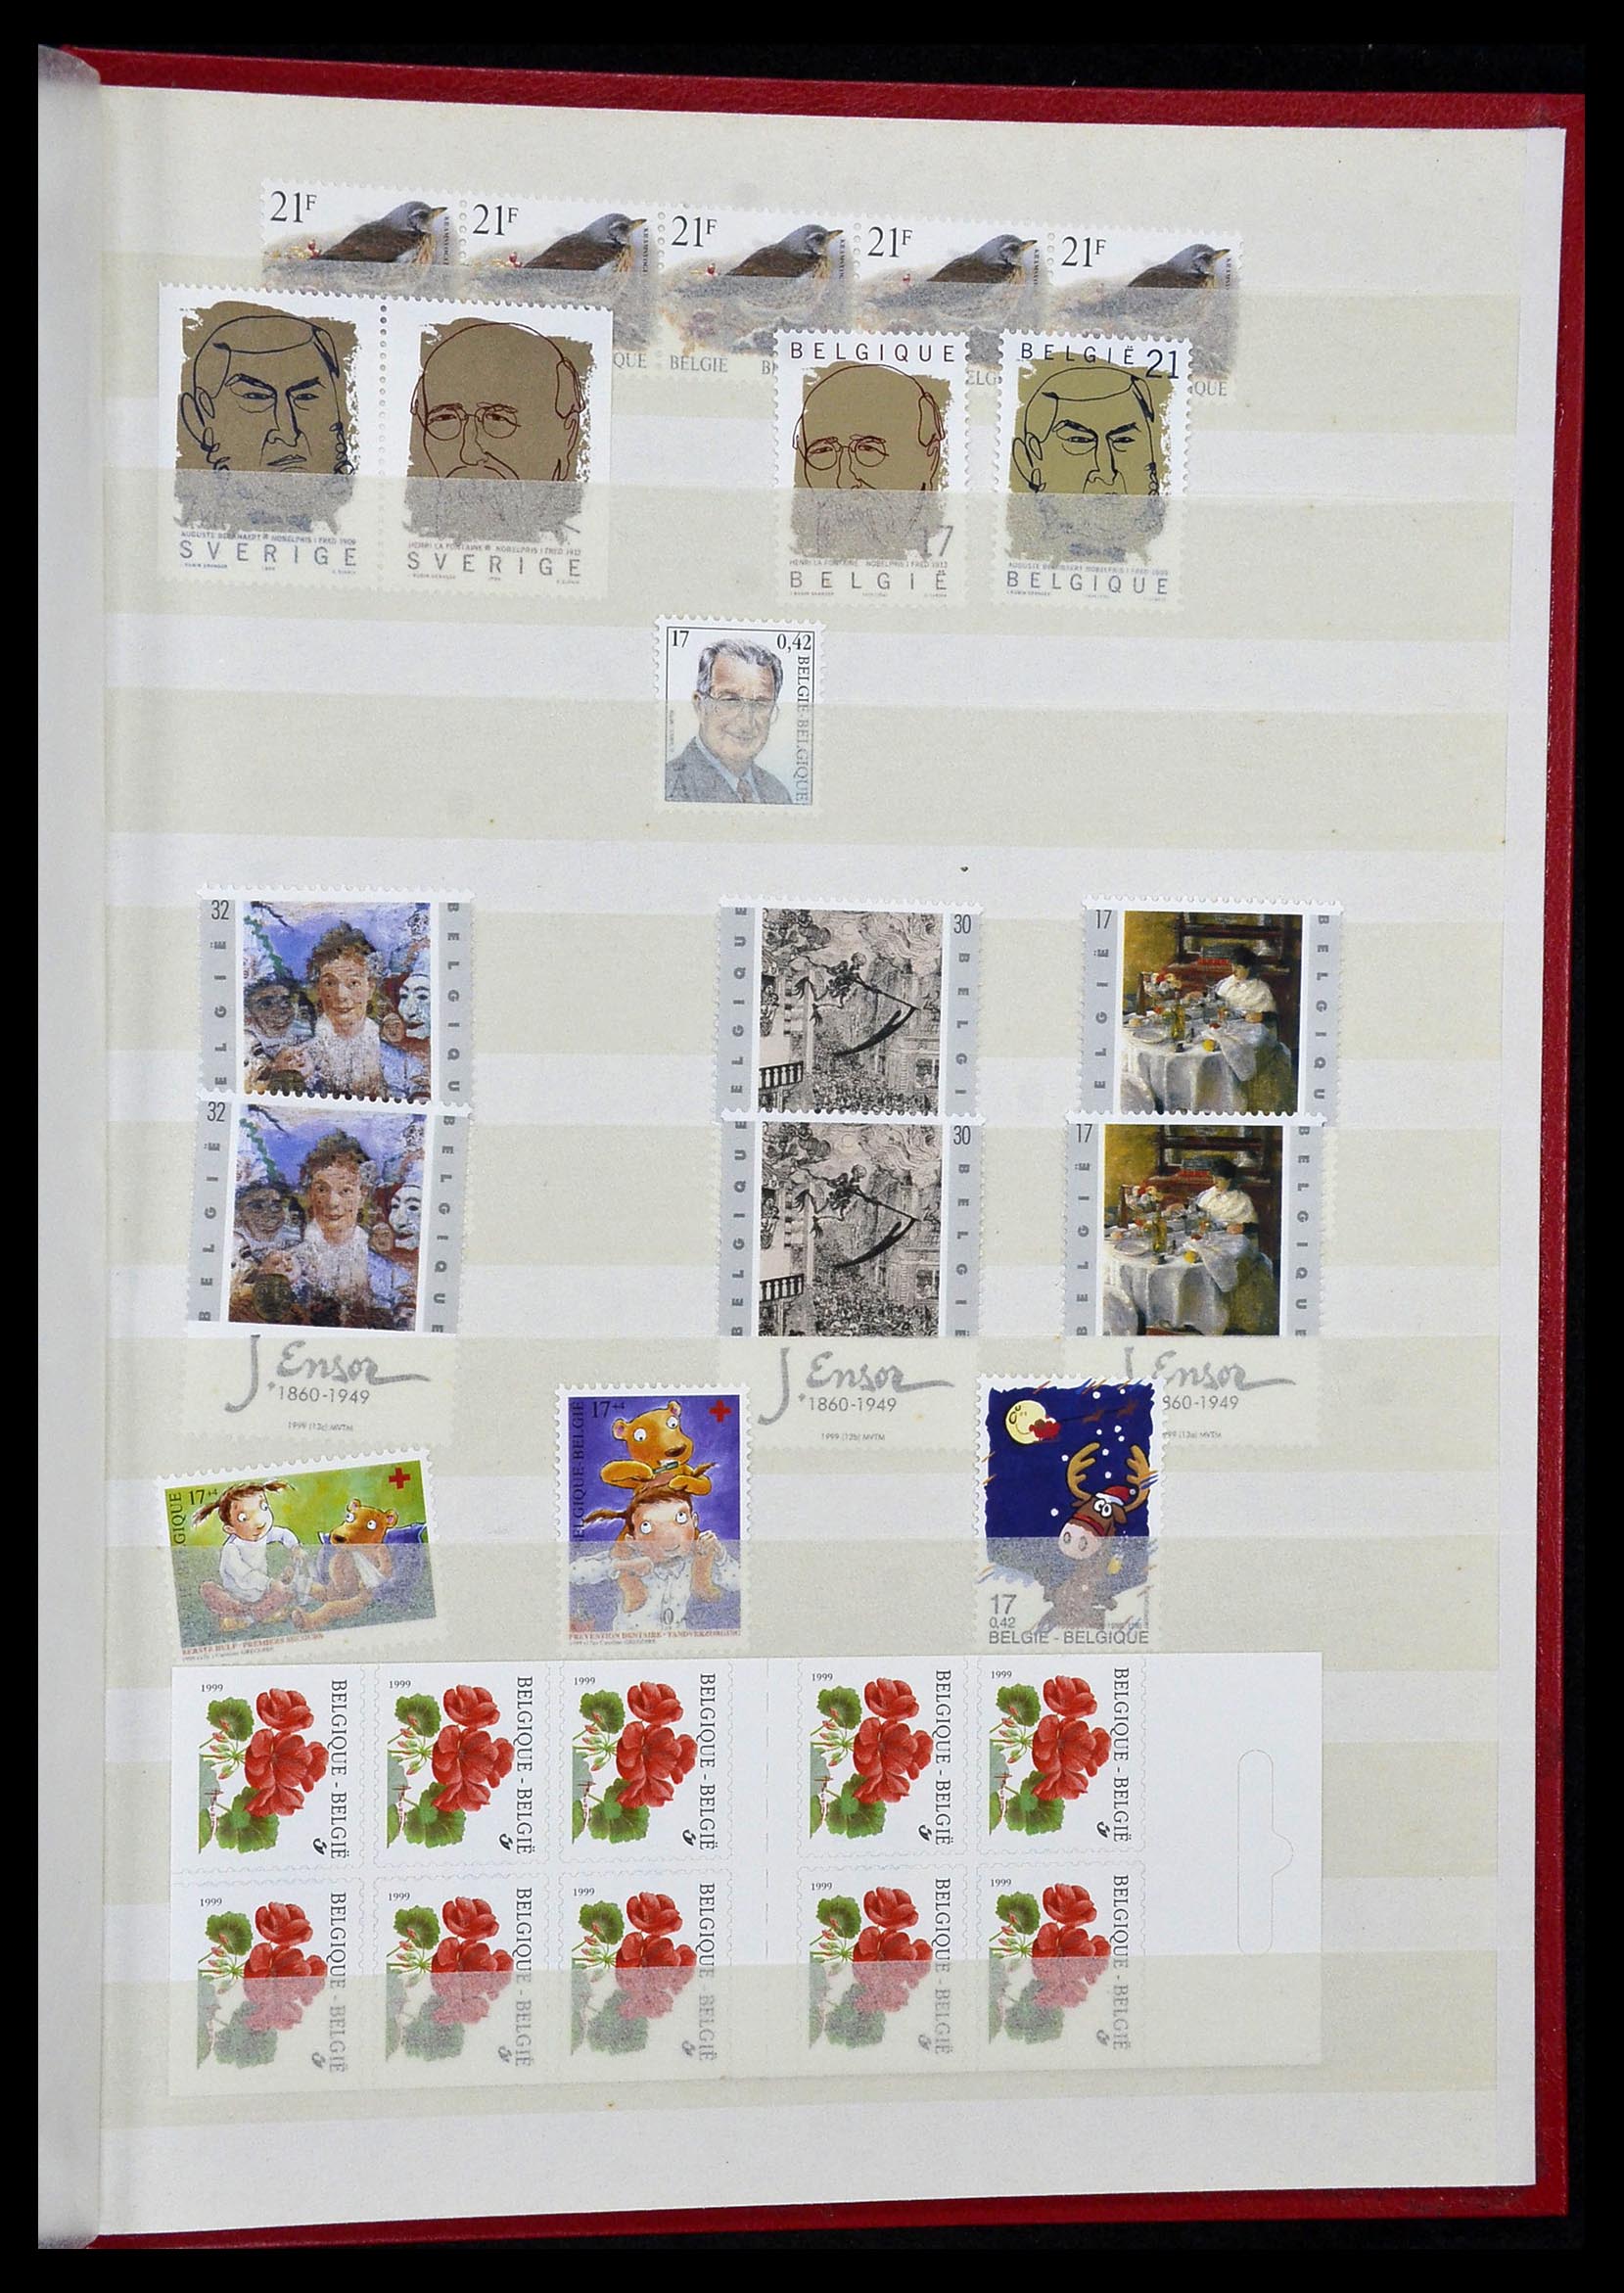 34019 088 - Stamp collection 34019 Belgium 1960-2004.